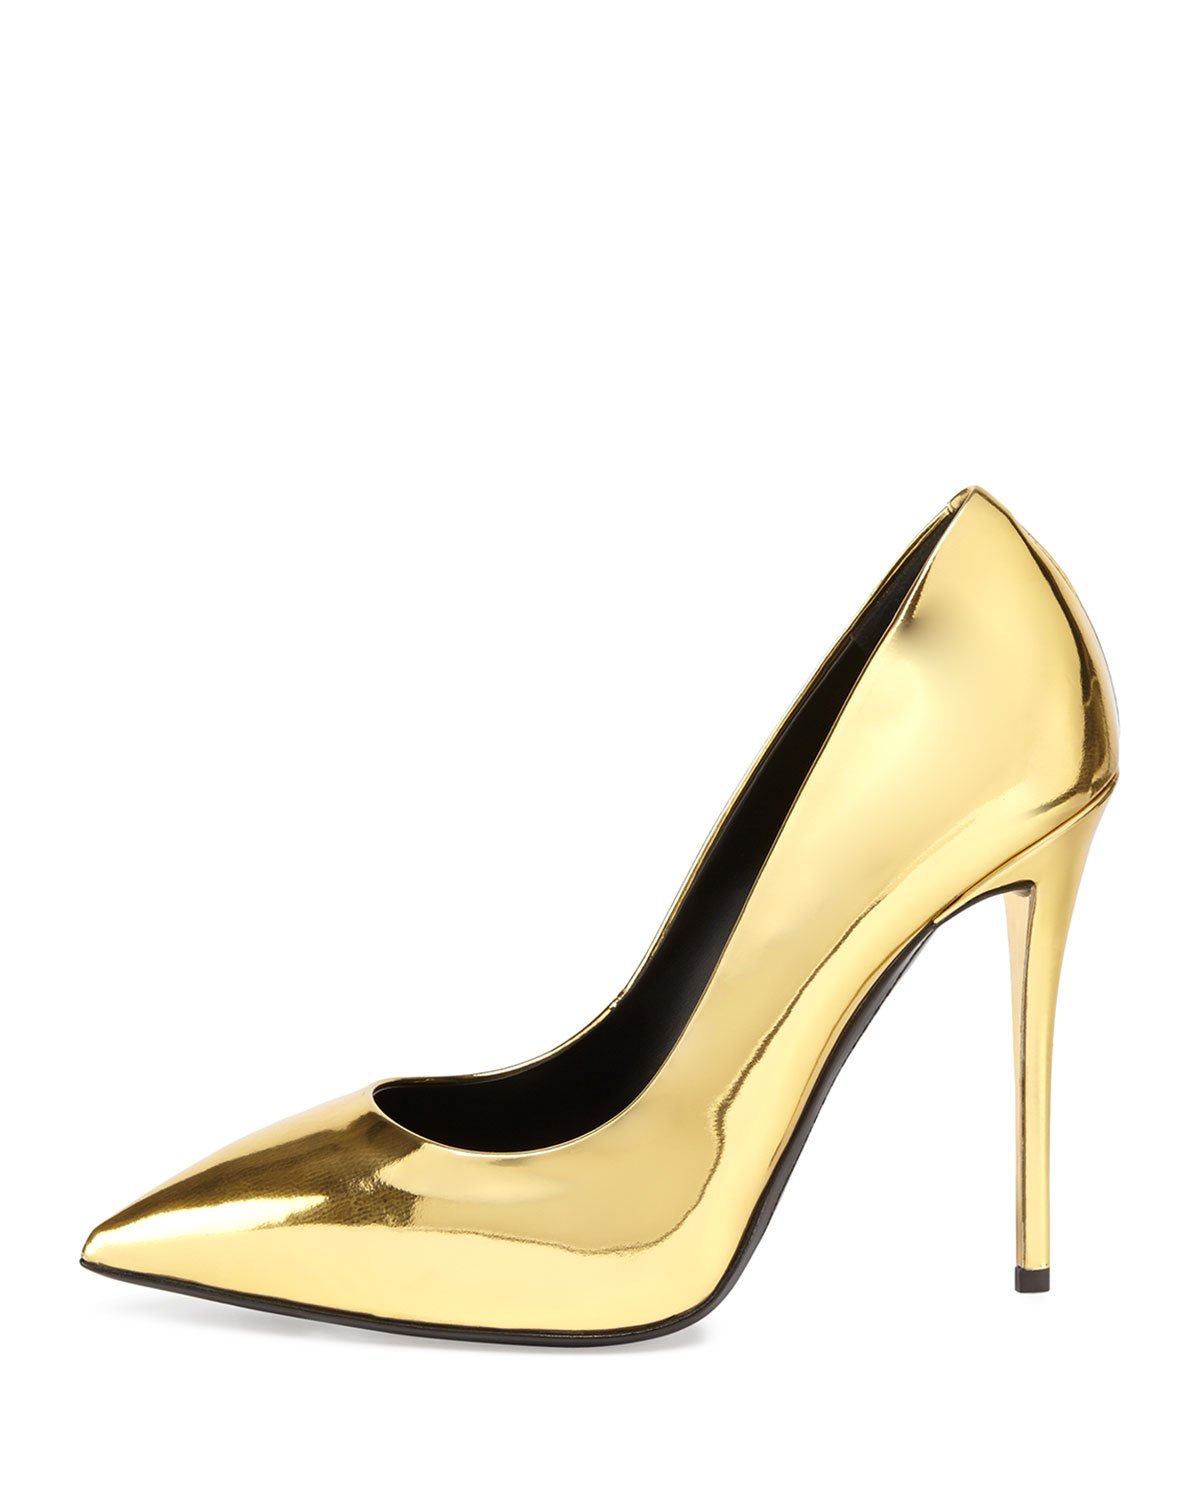 giuseppe zanotti metallic heels